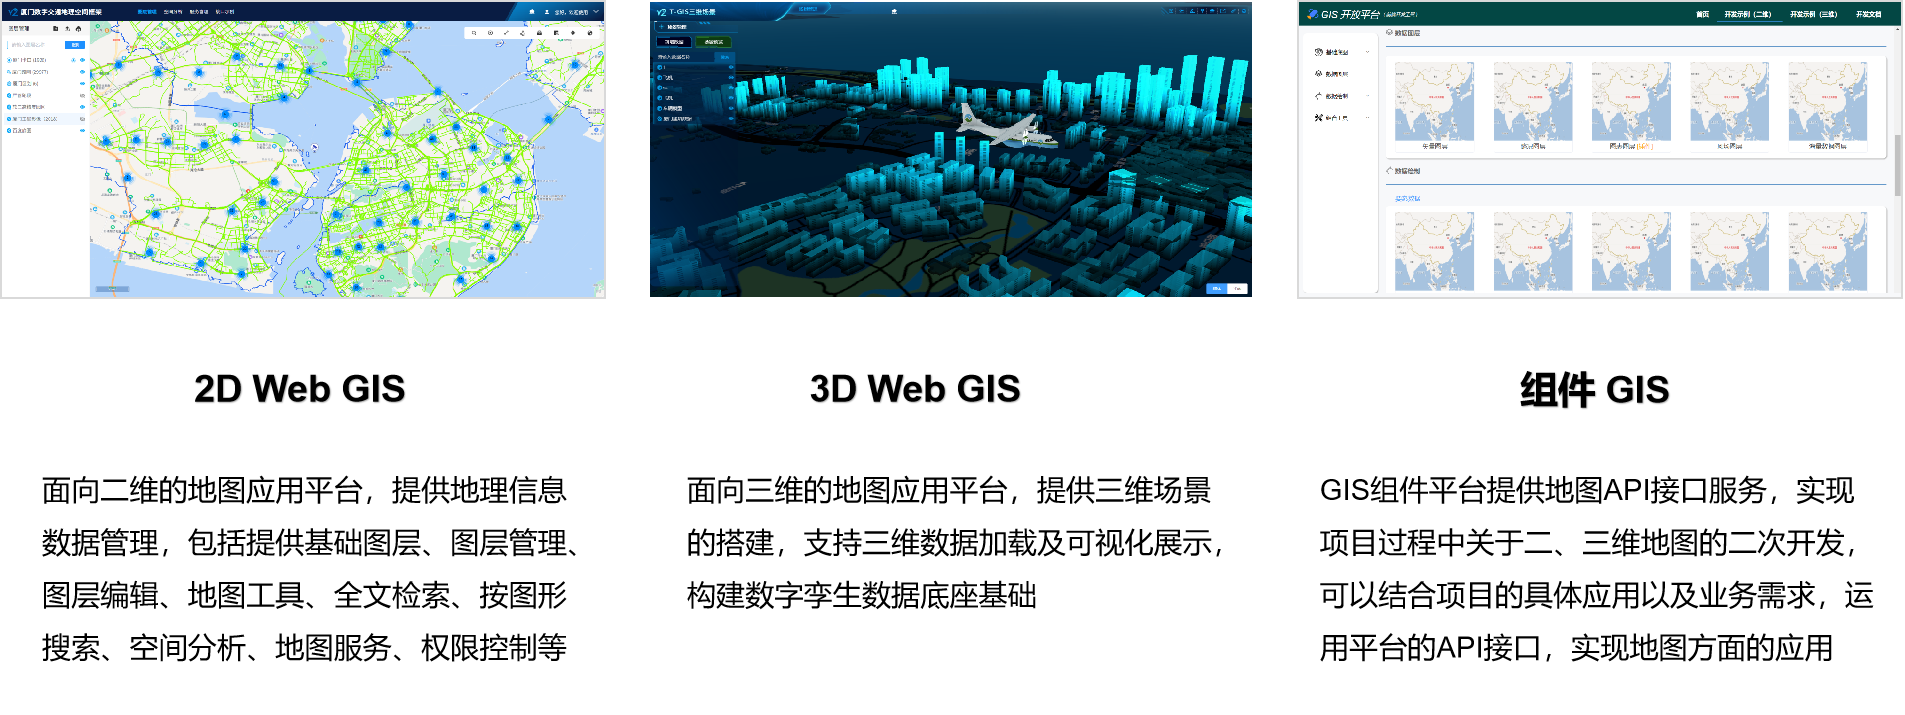 GIS平台-GIS开放平台配图.png